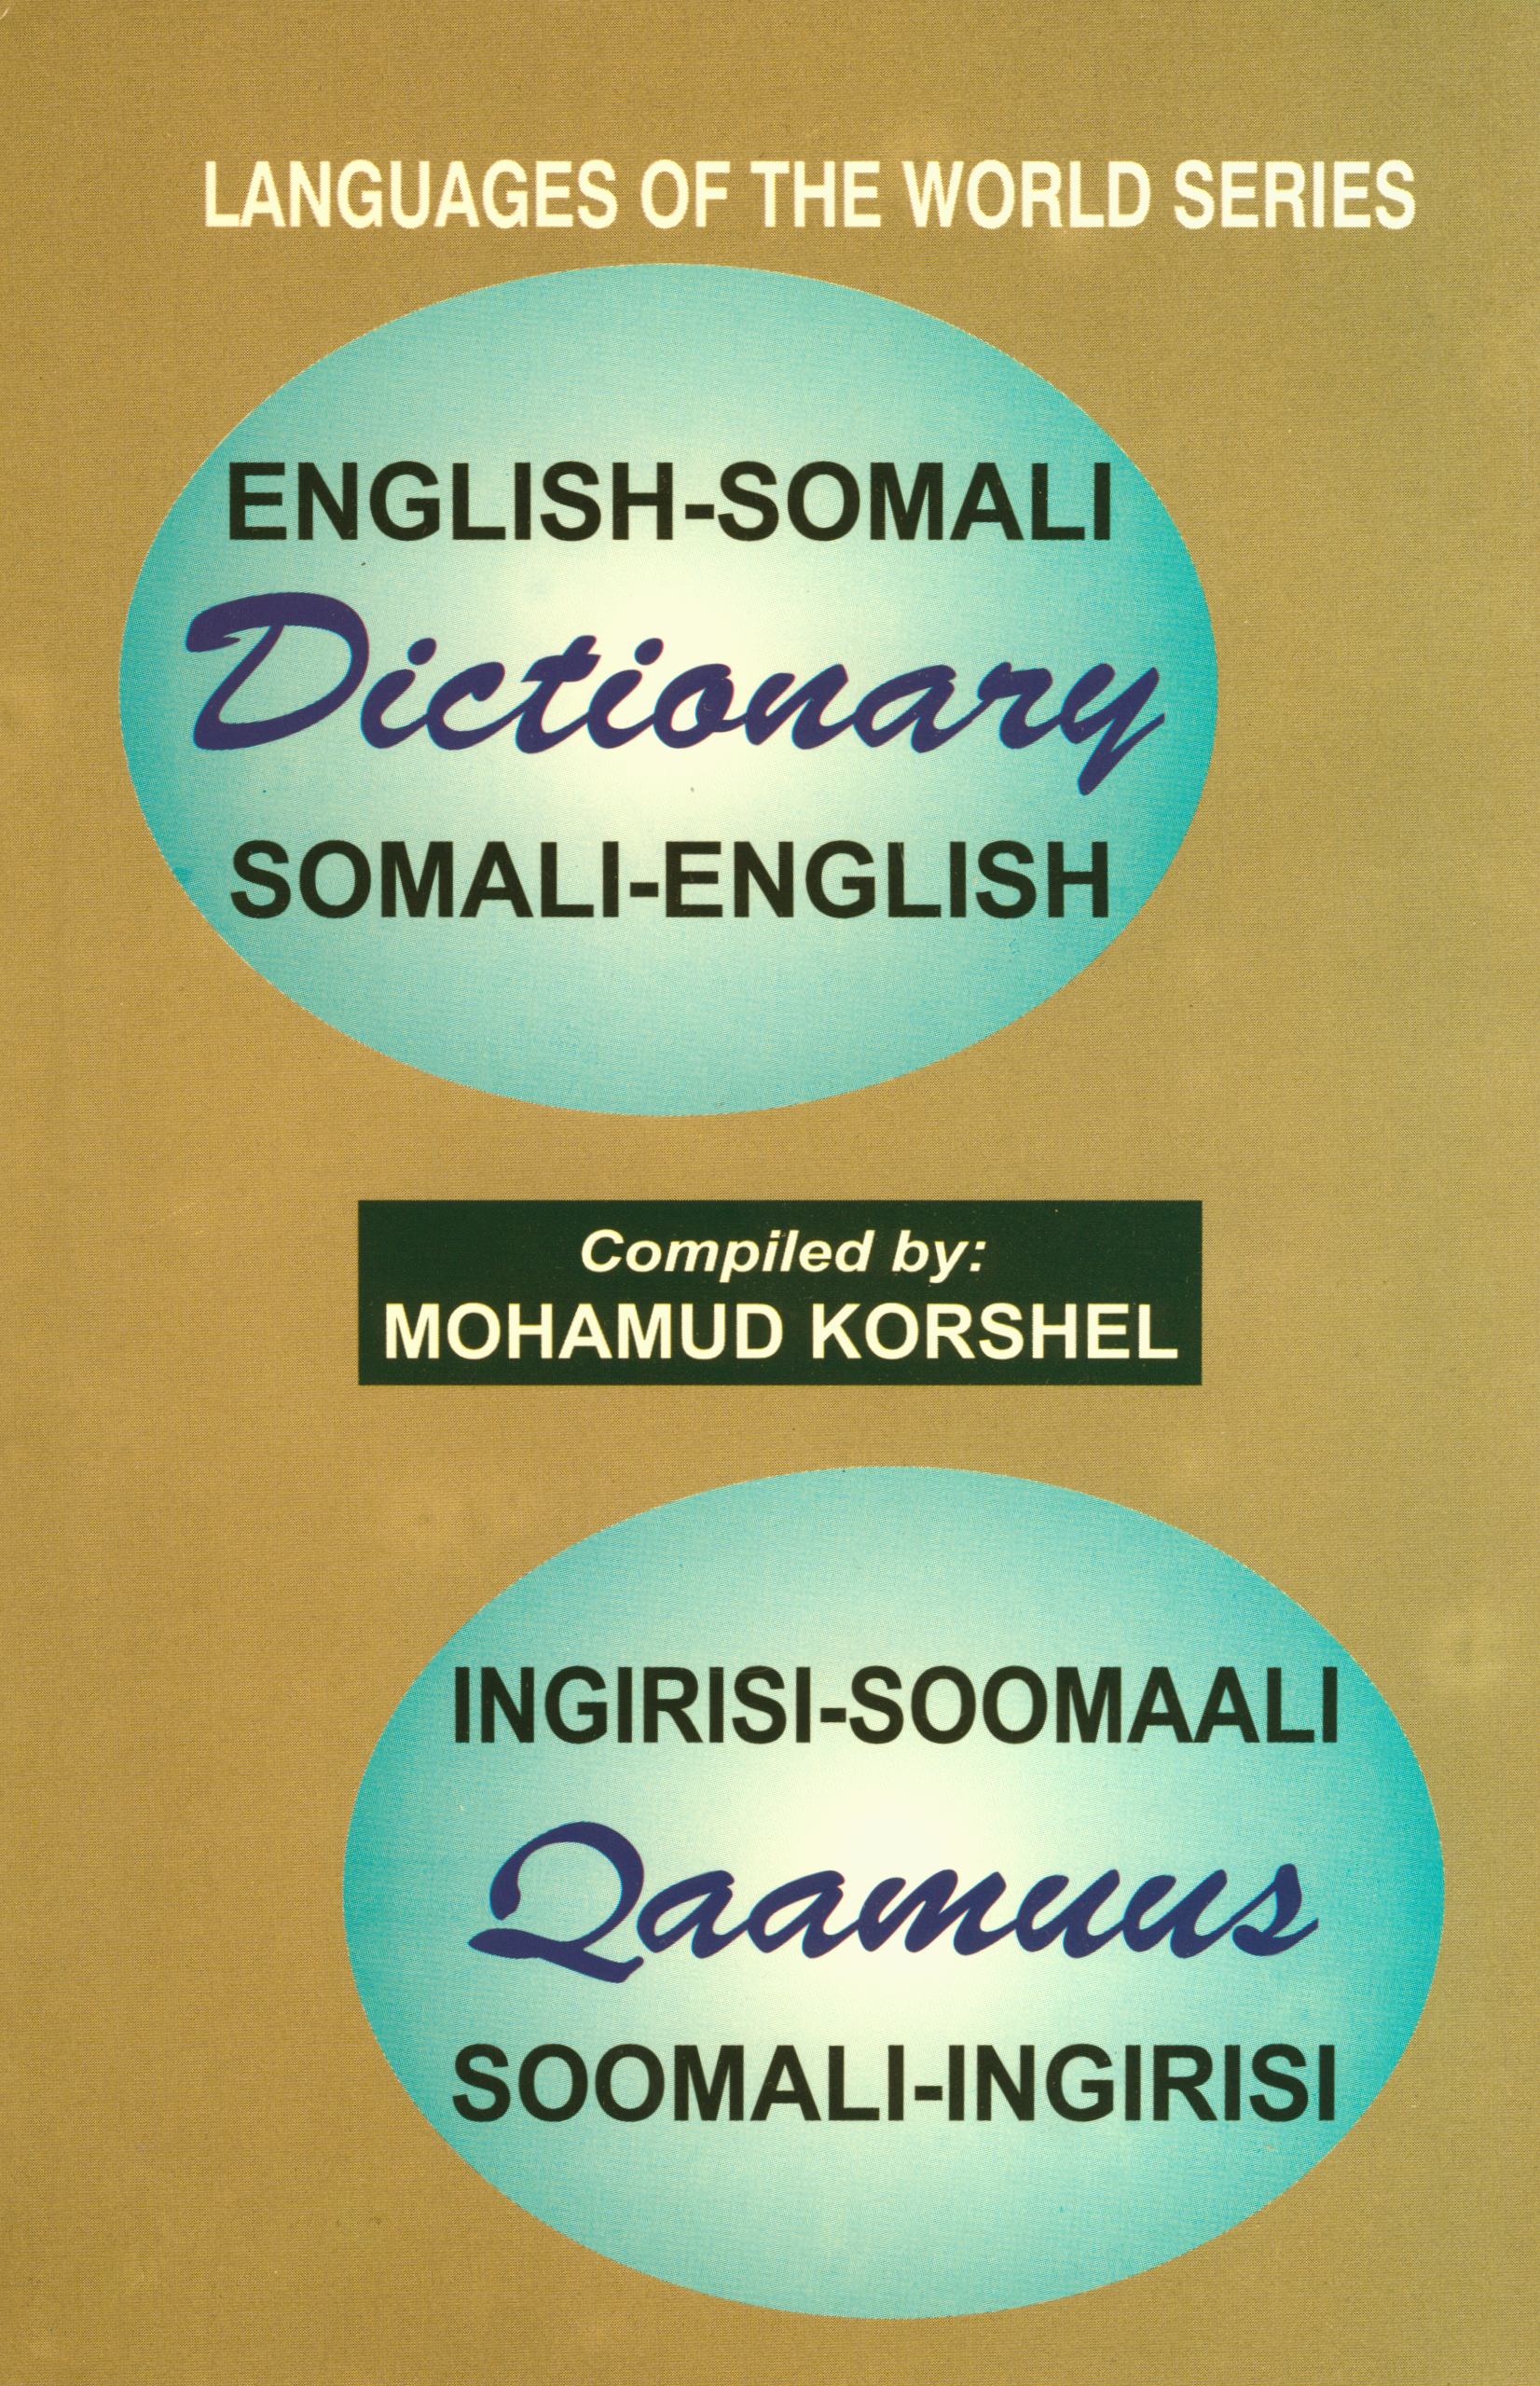 Somali-English and English-Somali Dictionary